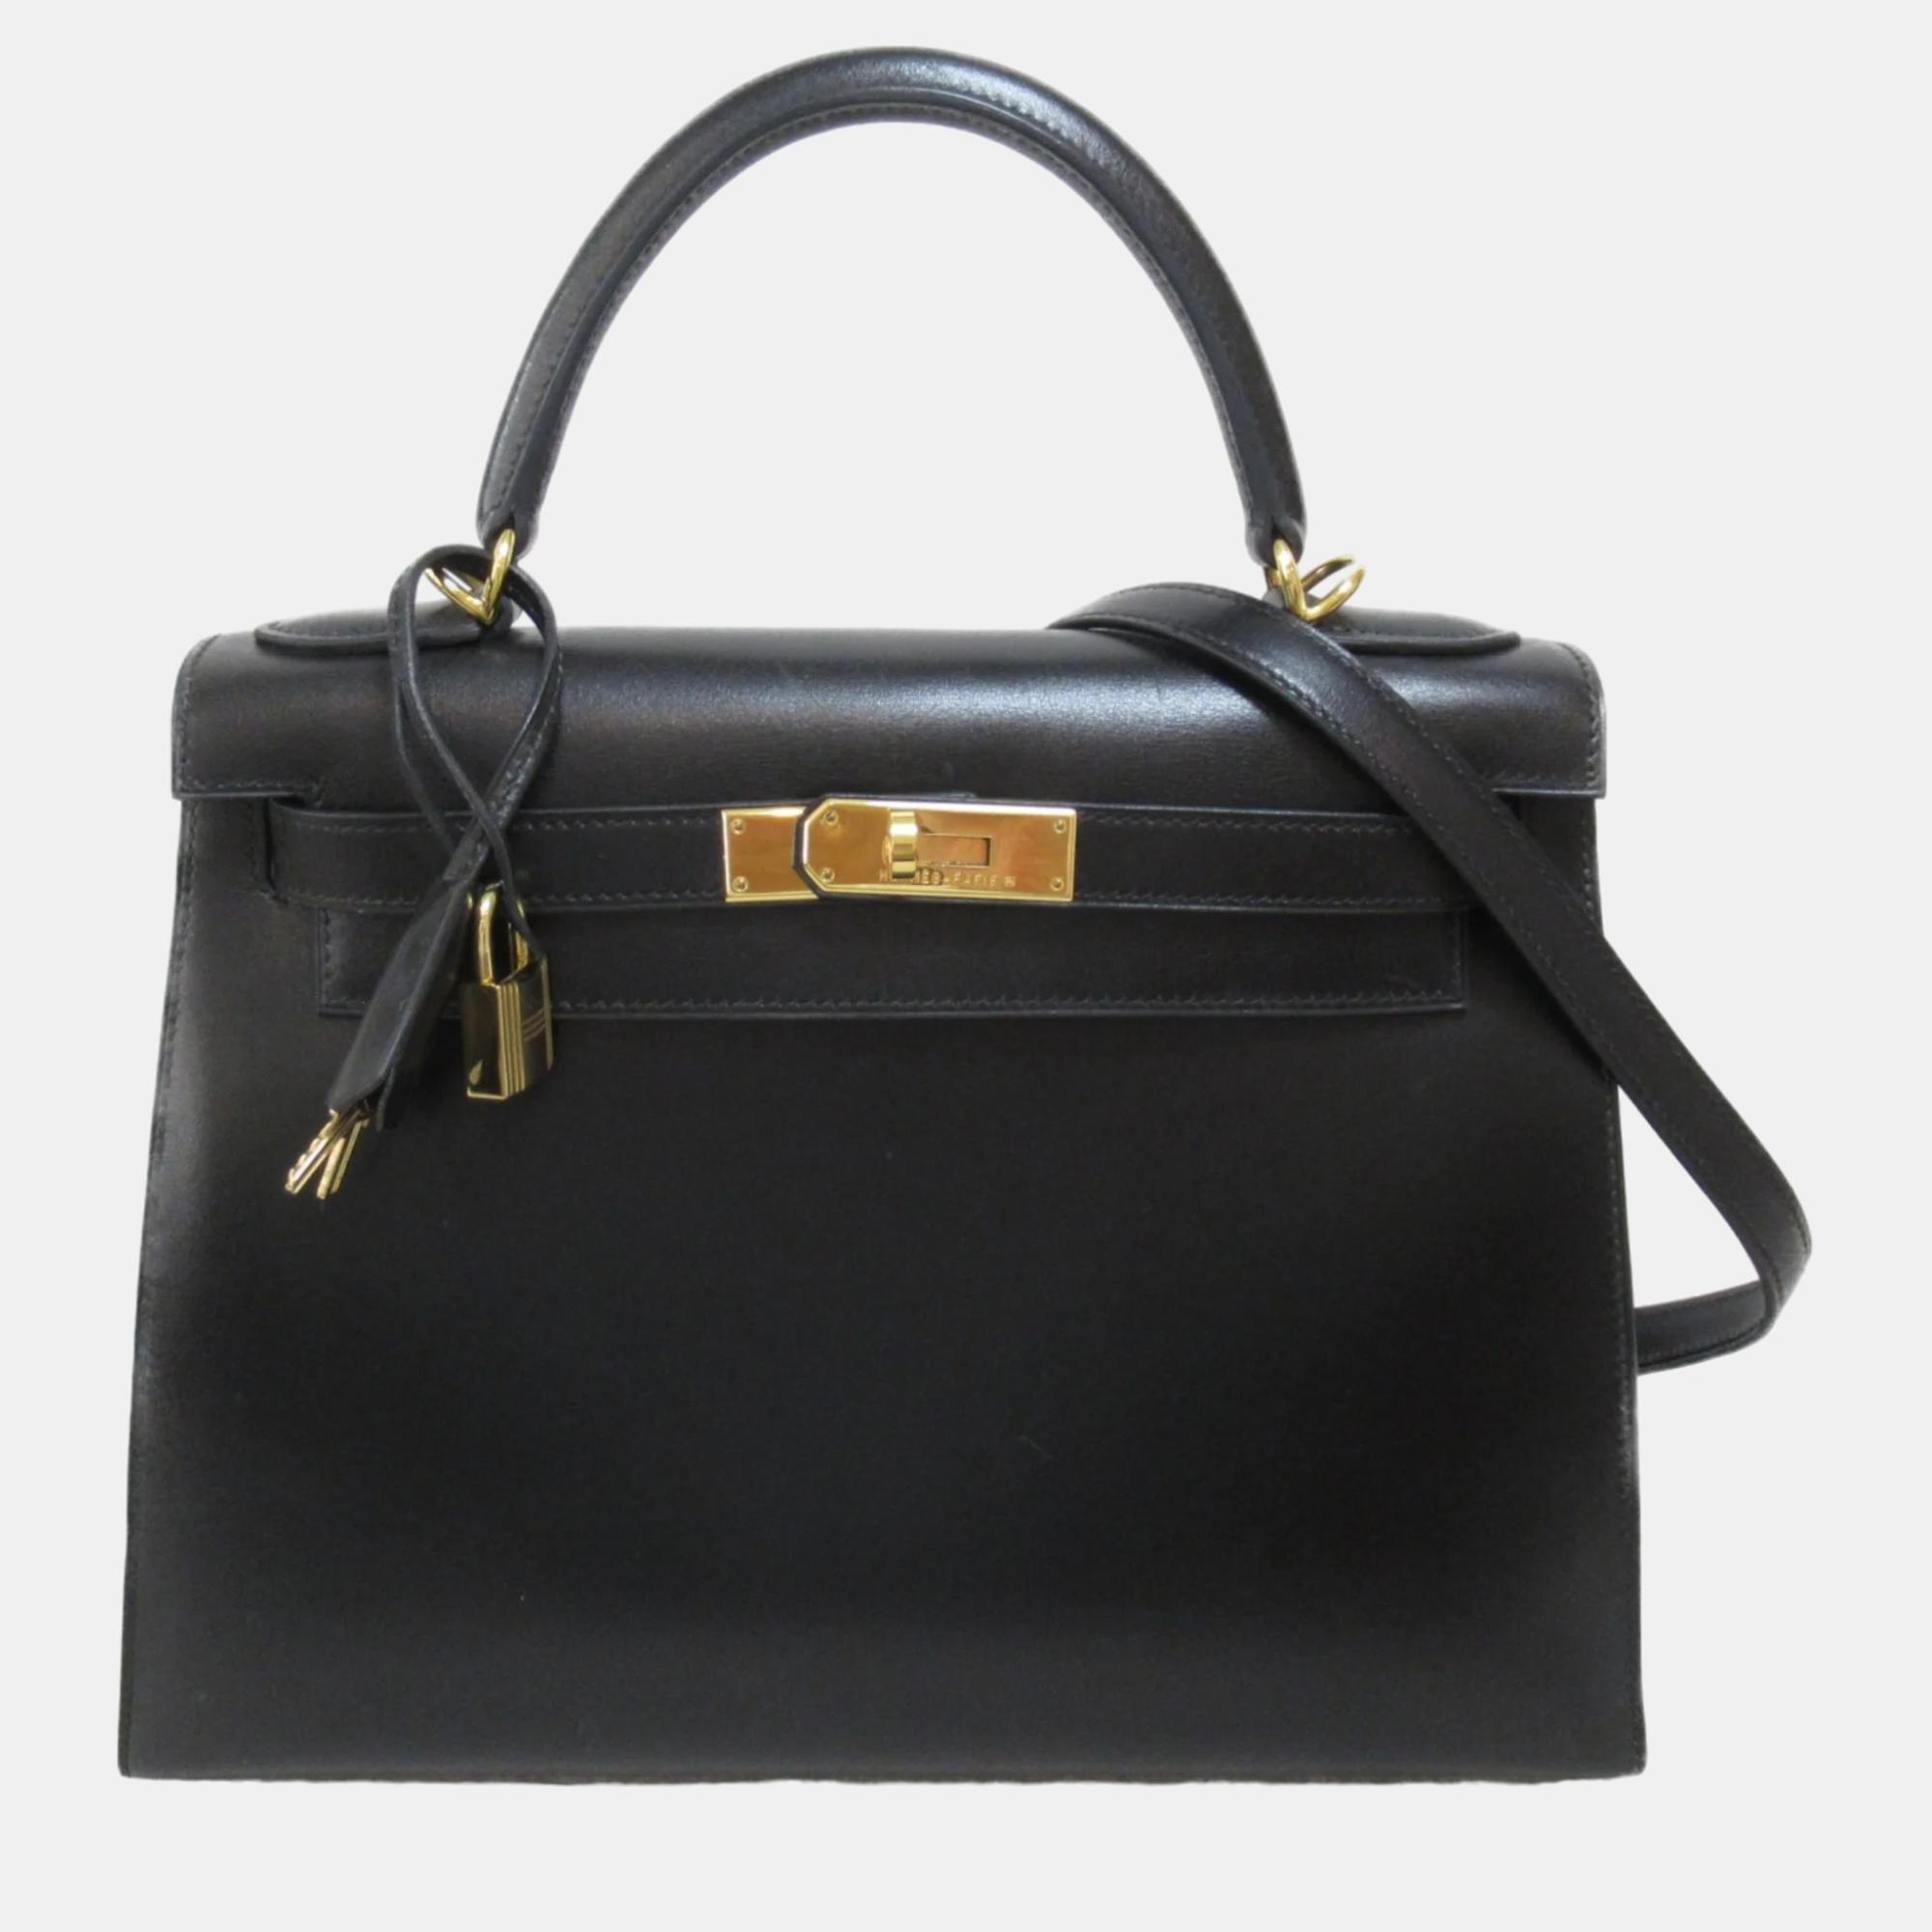 Hermes black box calf leather kelly handbag